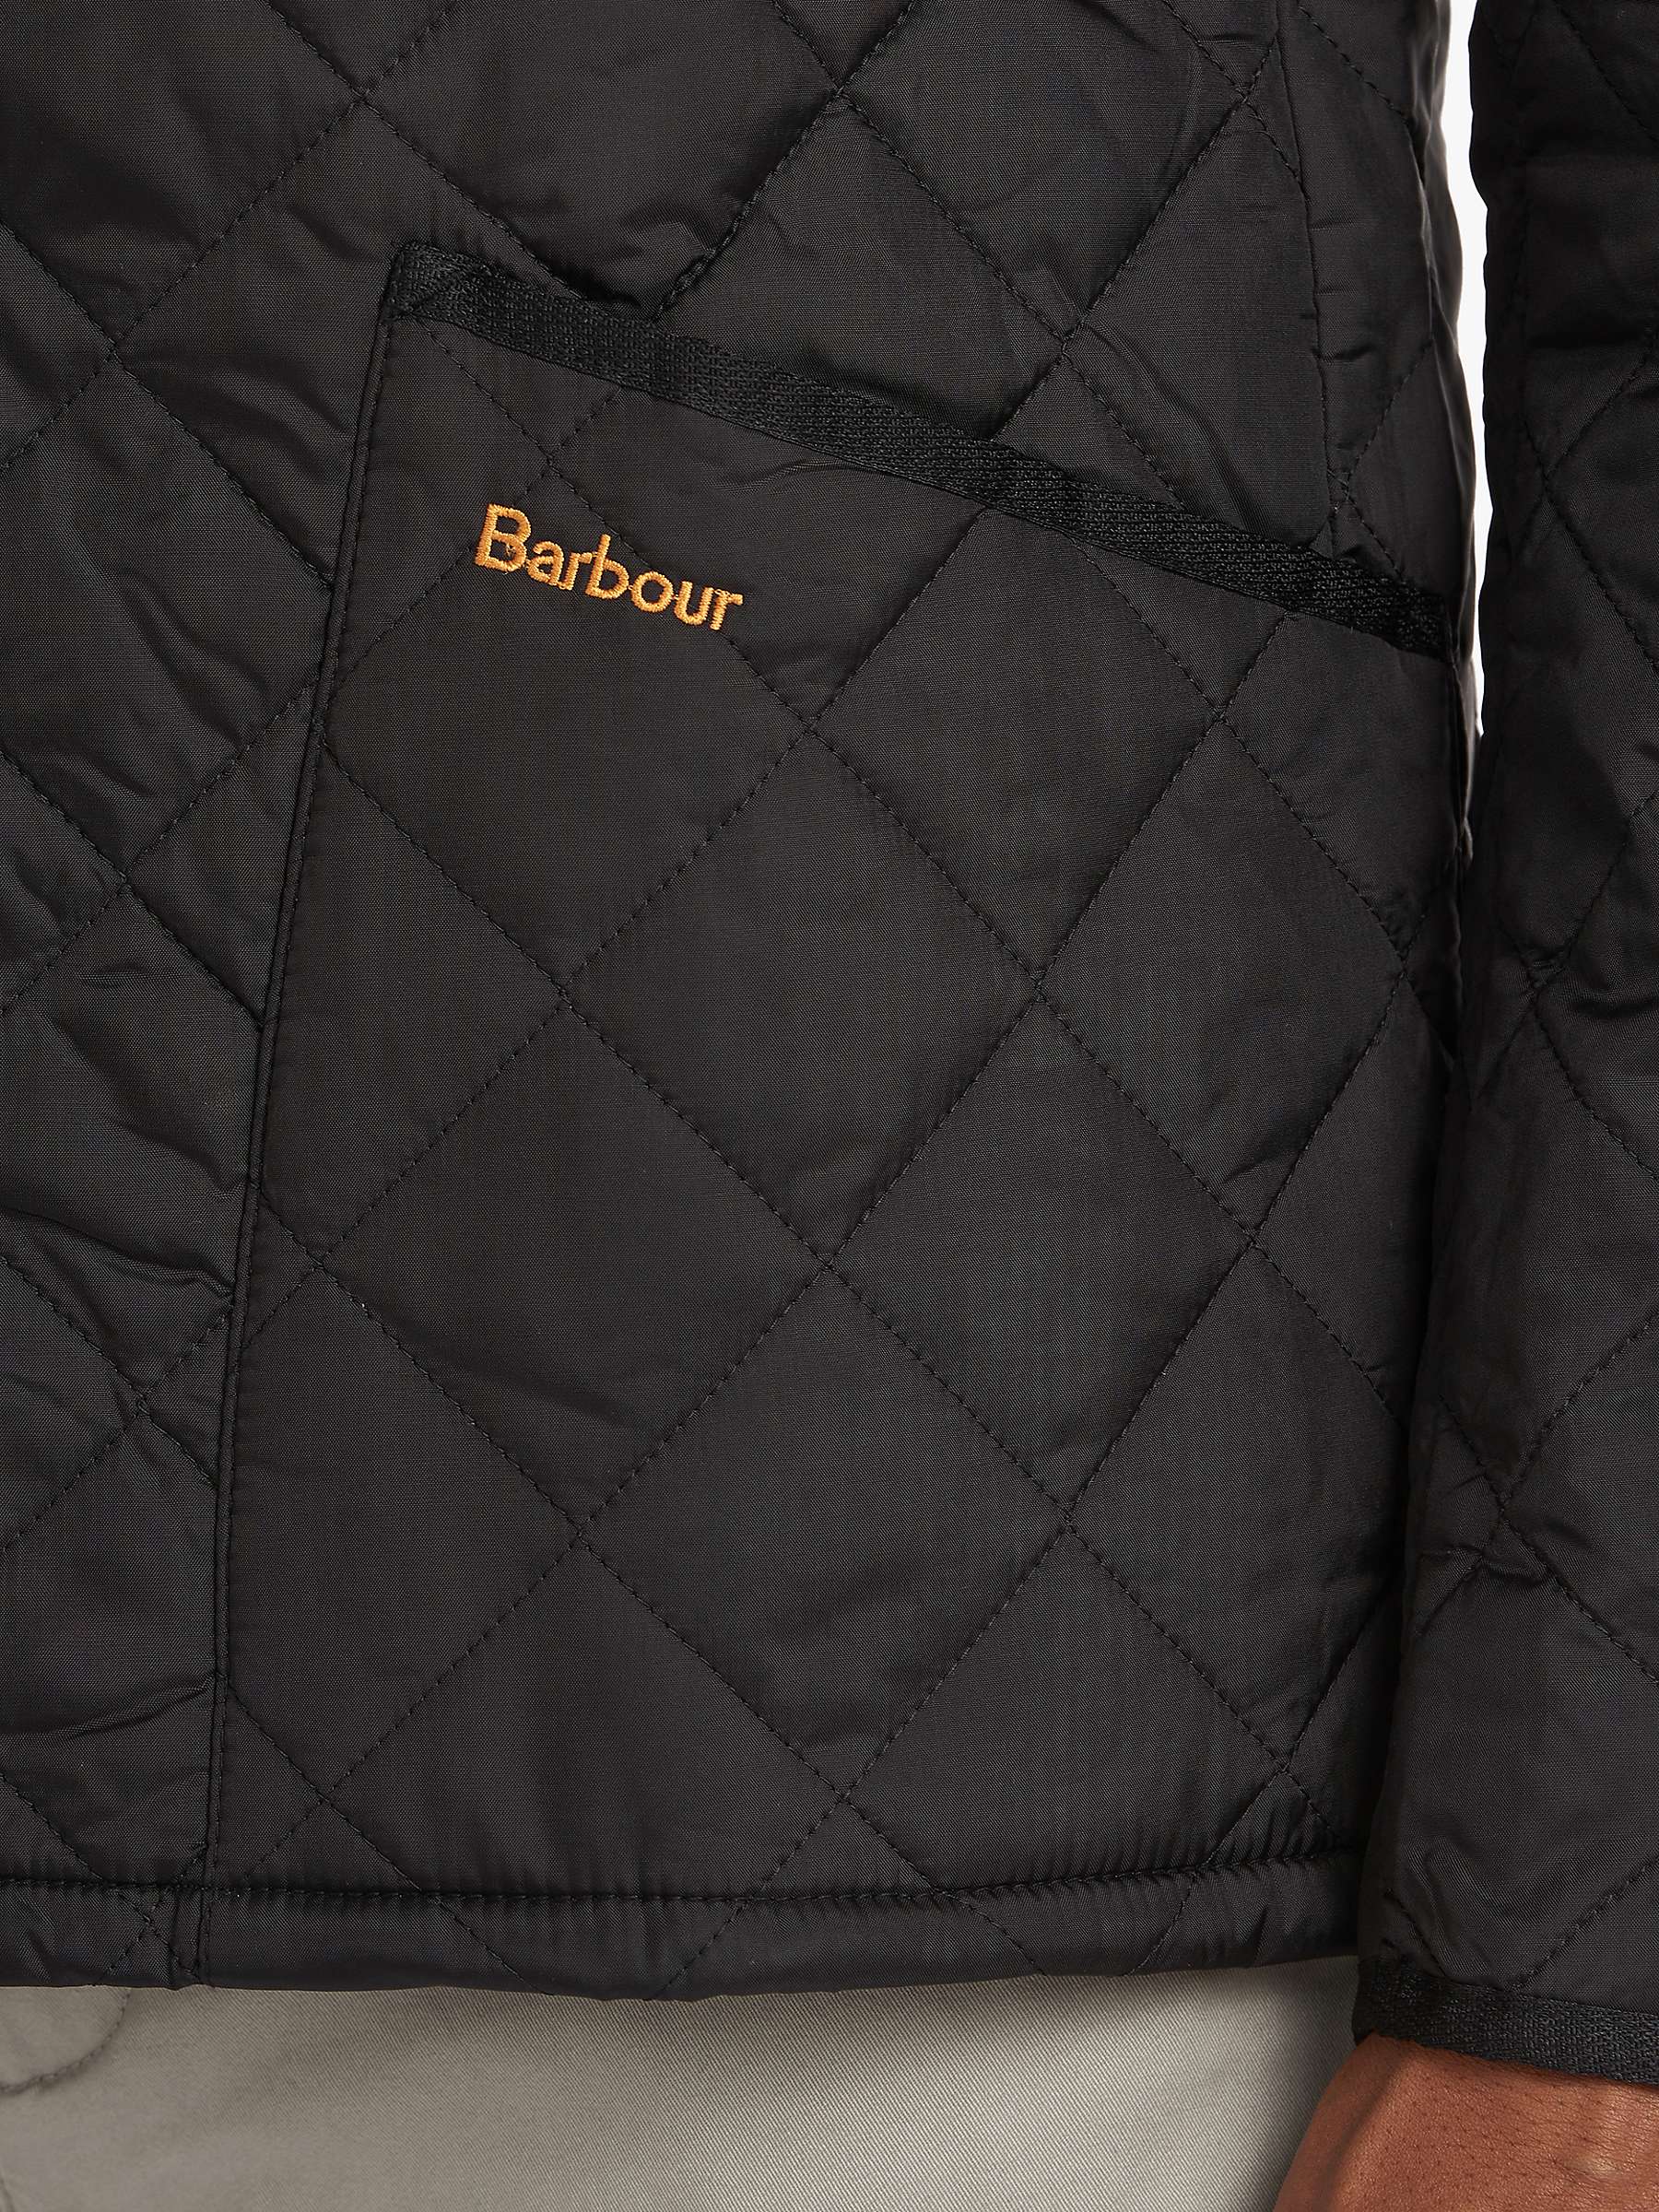 Buy Barbour Heritage Liddesdale Quilted Jacket Online at johnlewis.com